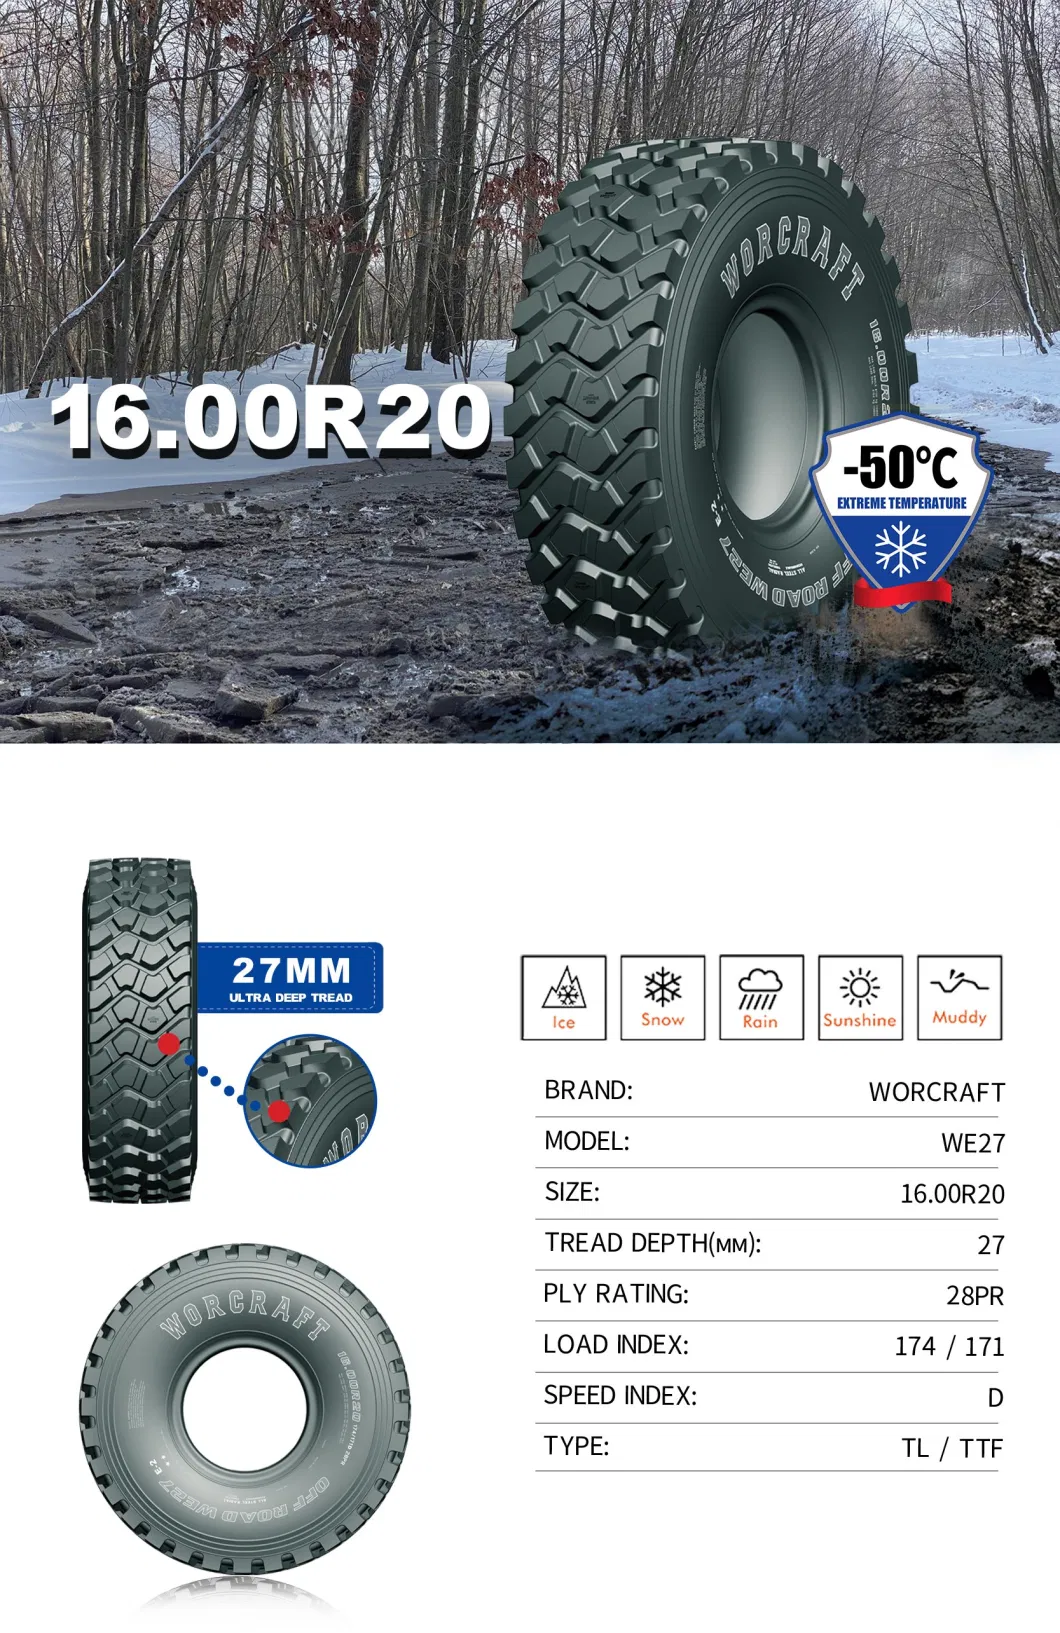 Worcraft Brand Truck Tyre 16.00r20 Deep Tread Depth